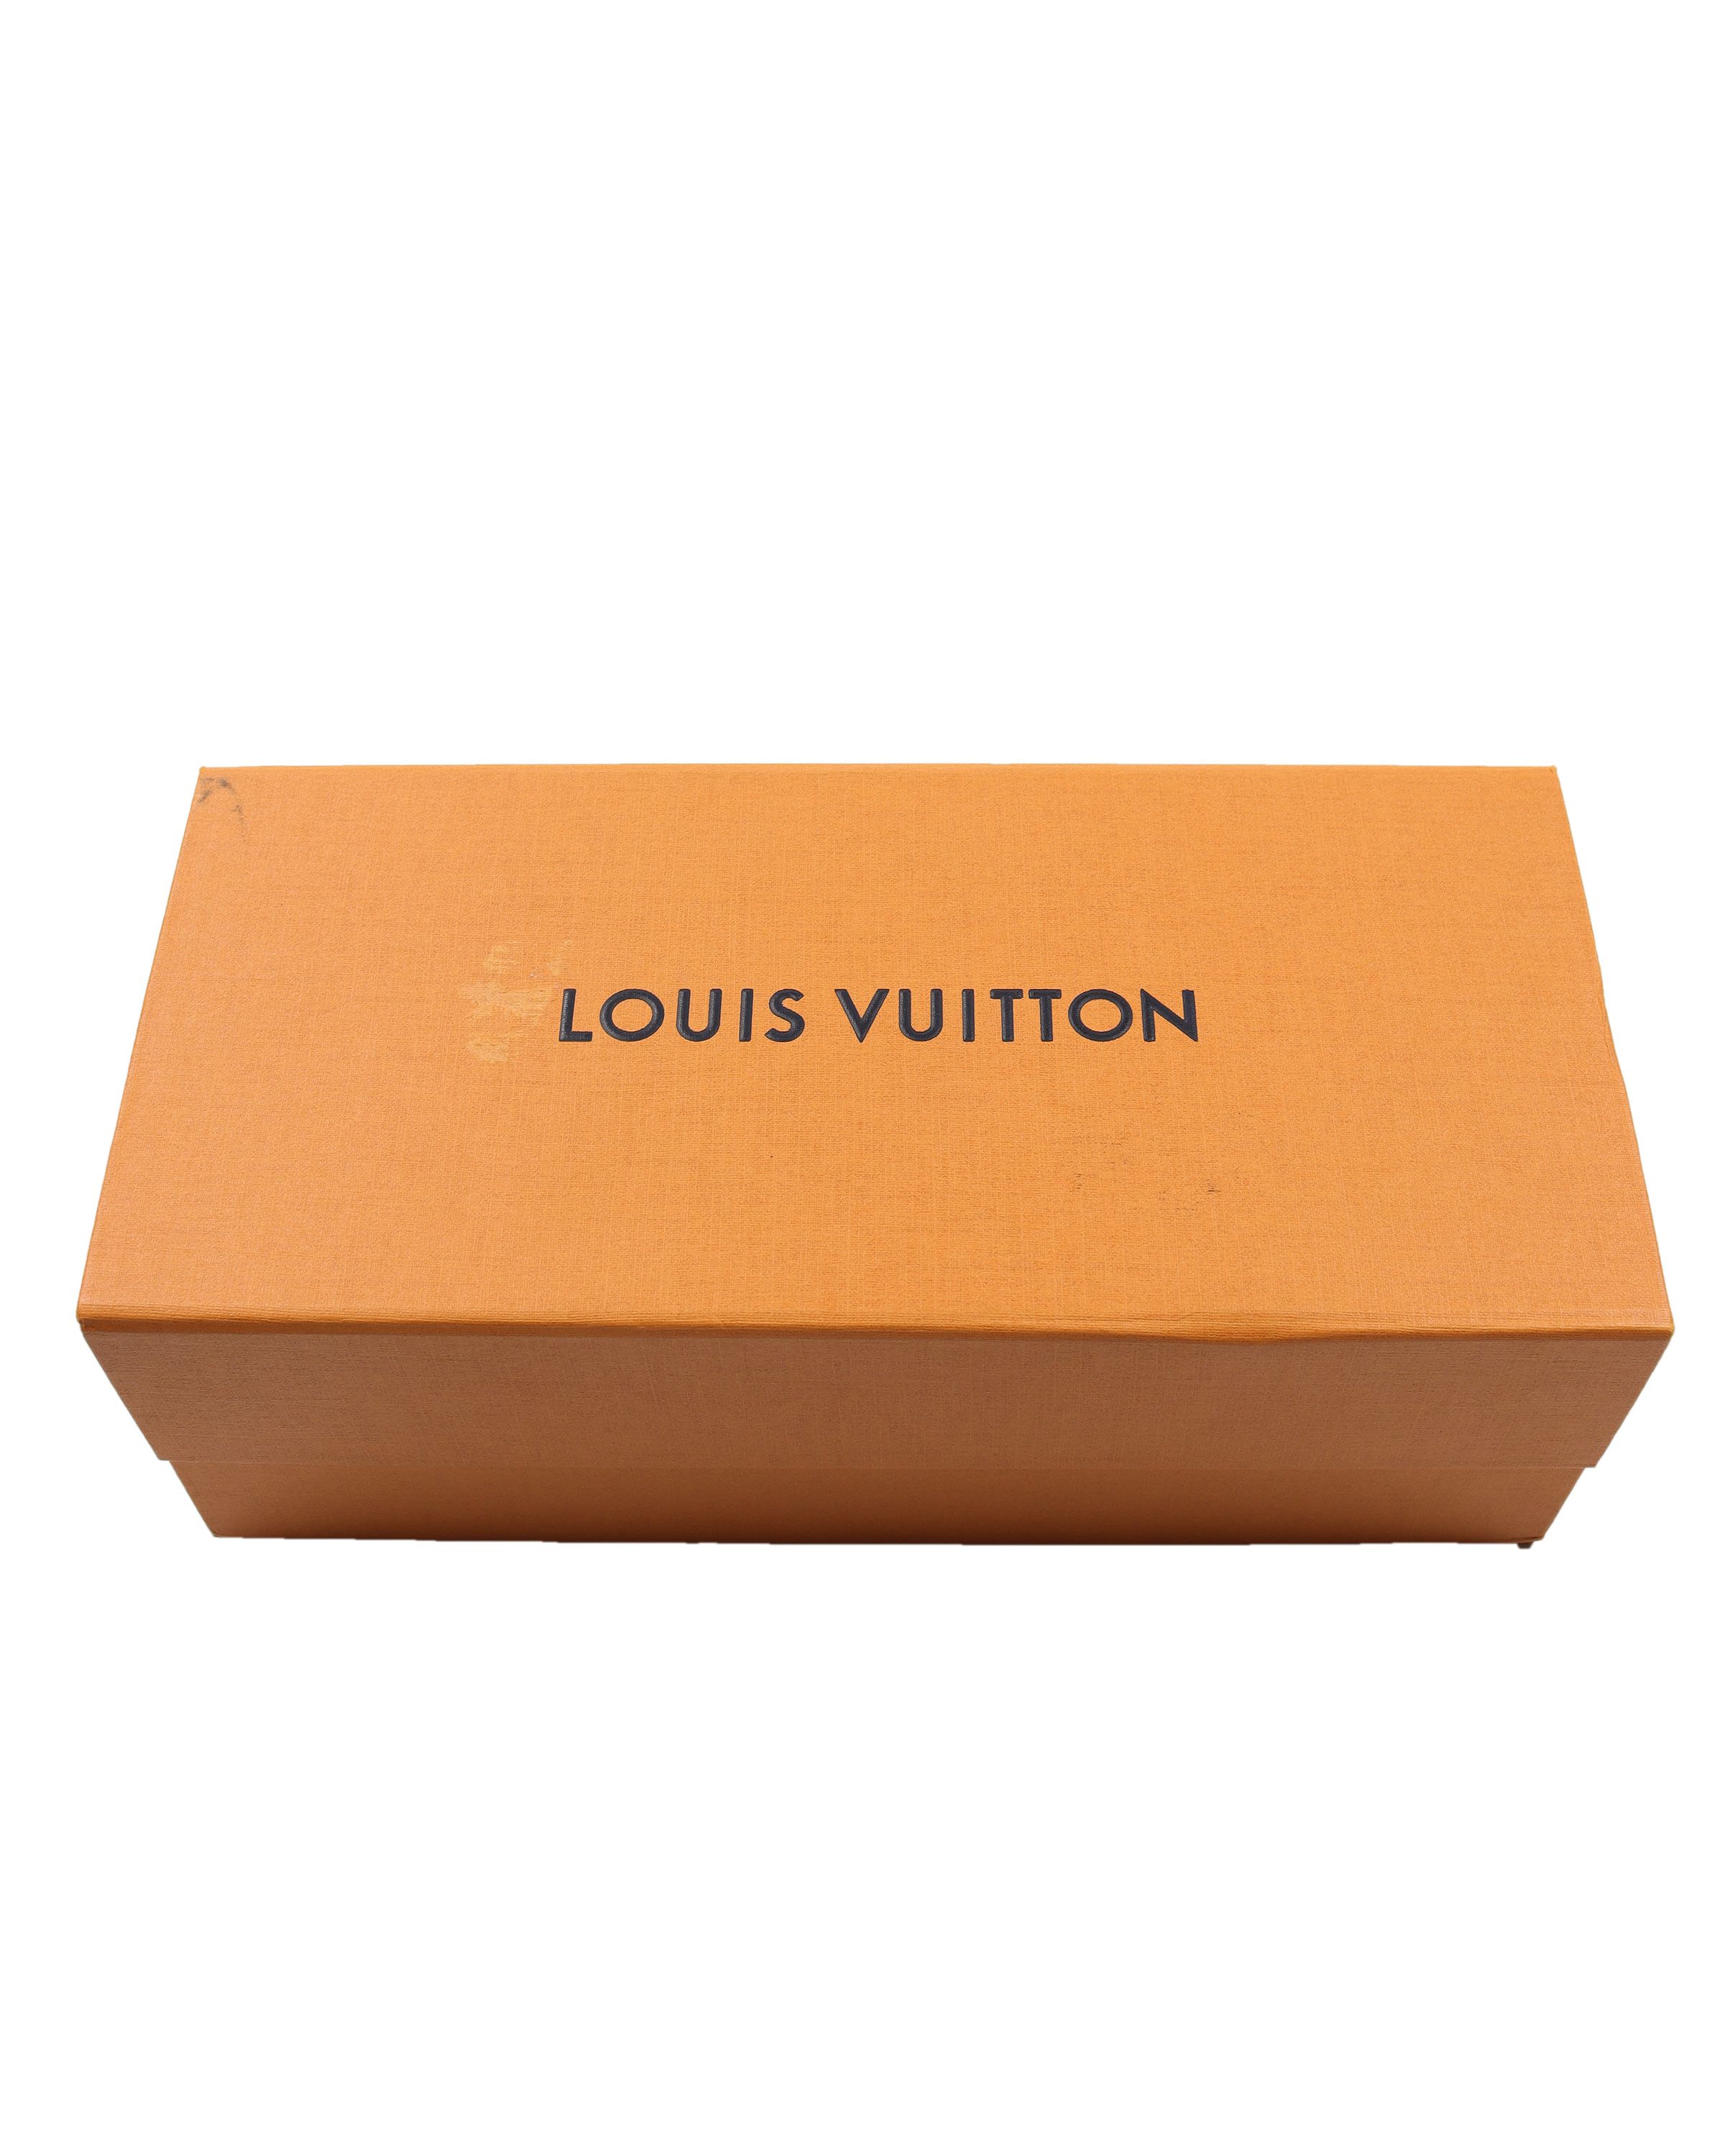 Sold at Auction: Louis Vuitton, Louis Vuitton Horizon Wireless